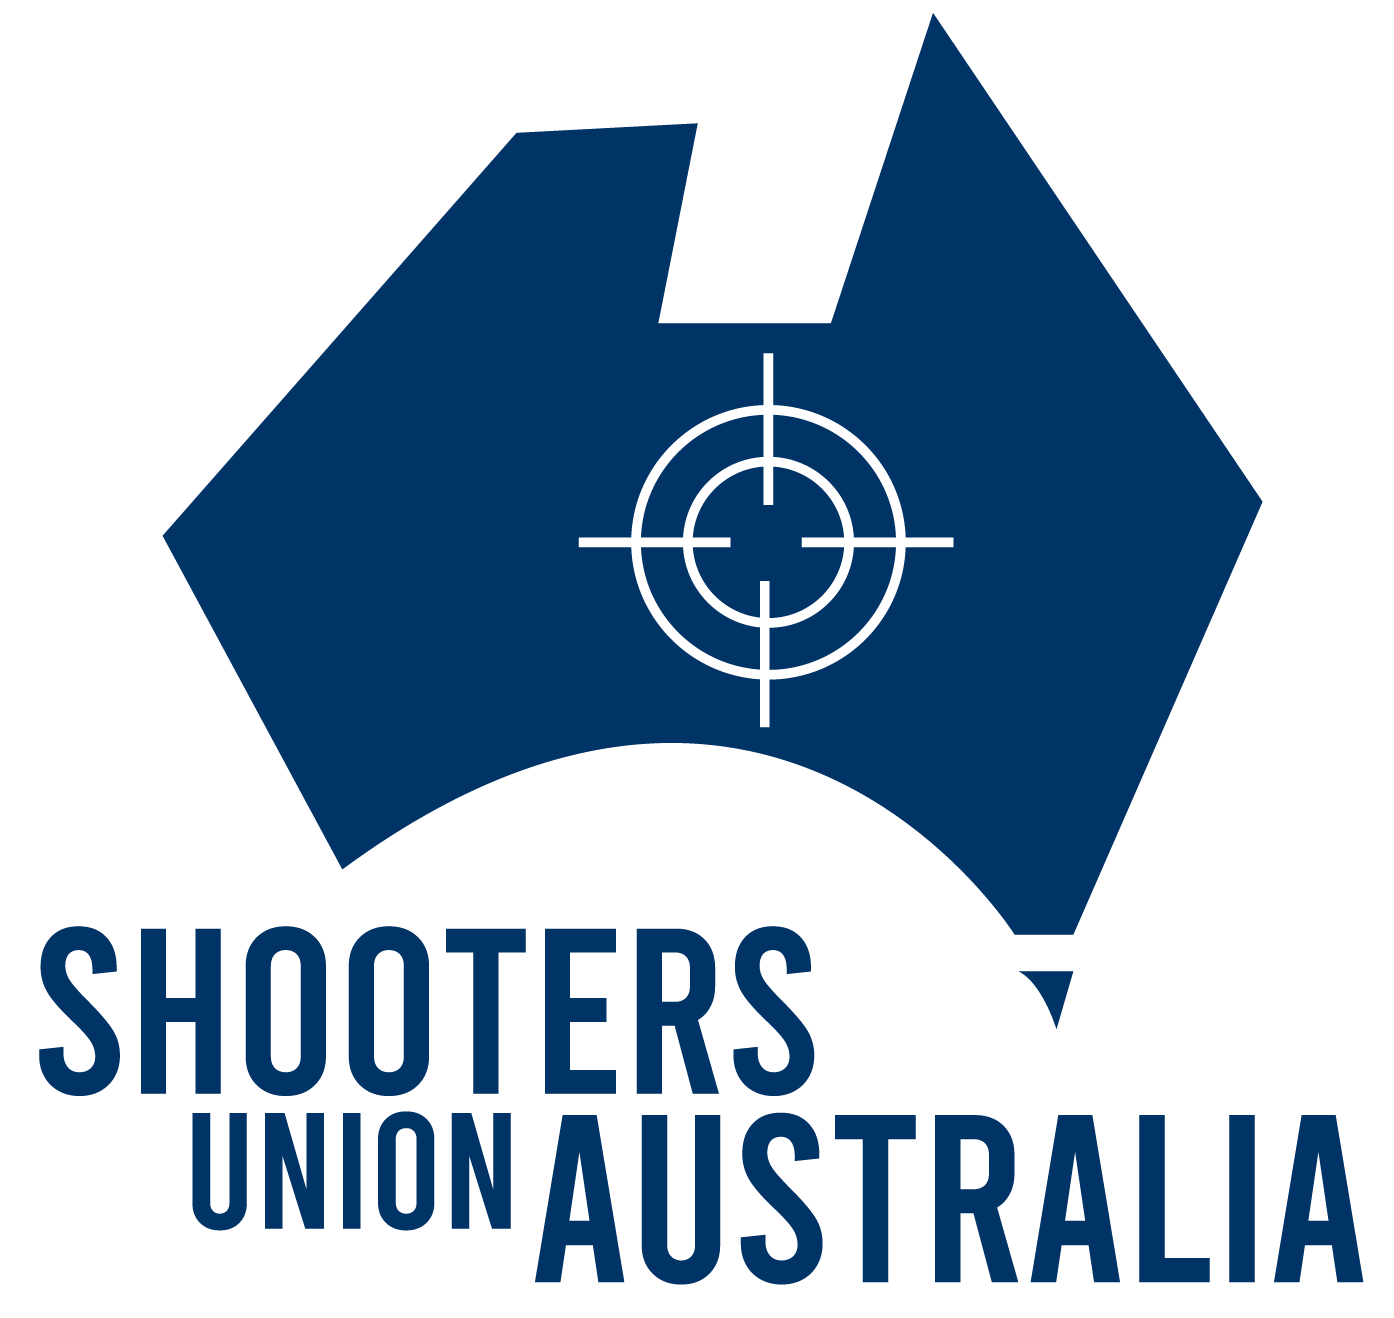 Shooters Union Australia